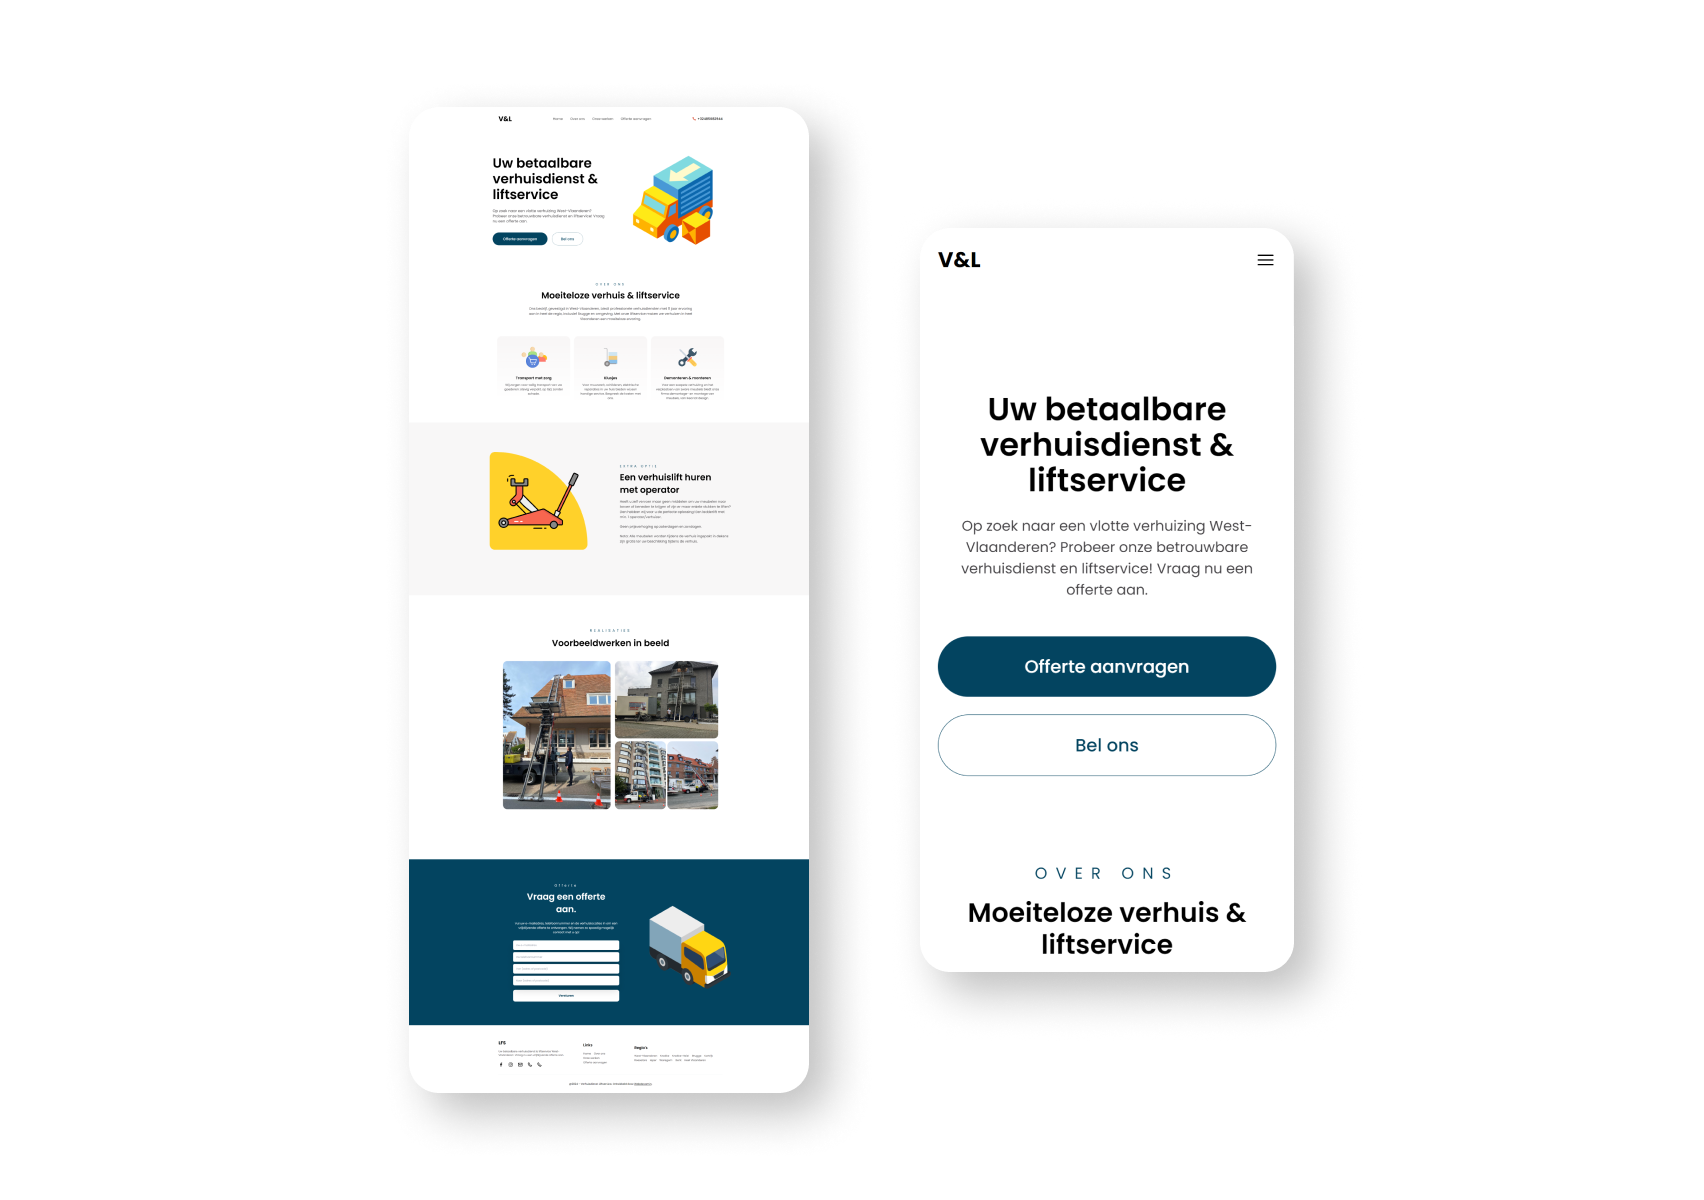 A landing page of Verhuisdienst Liftservice website in both desktop as well as mobile viewports.